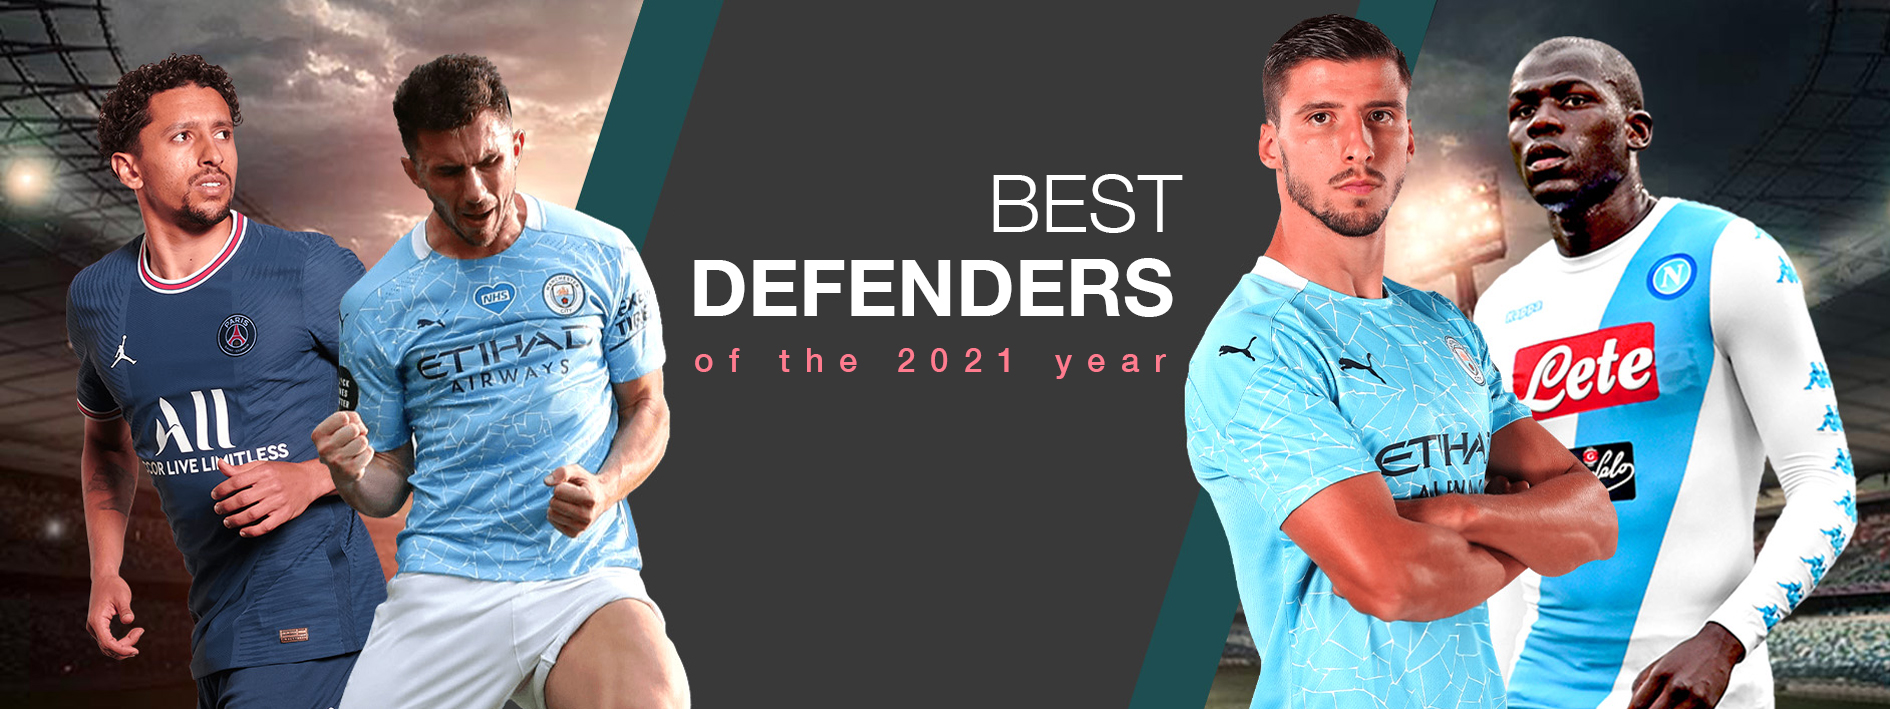 Best Defenders Of The 2021 Year